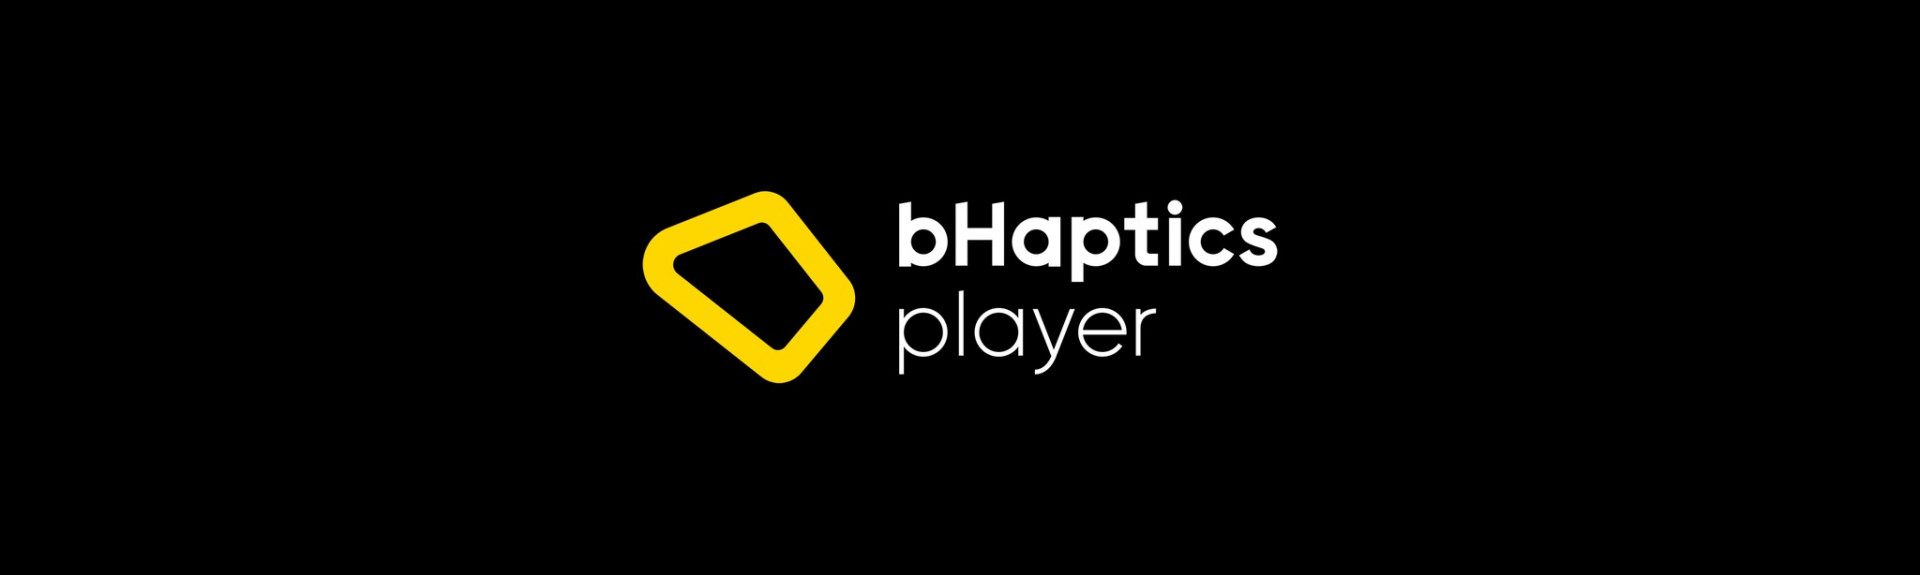 bHaptics Player